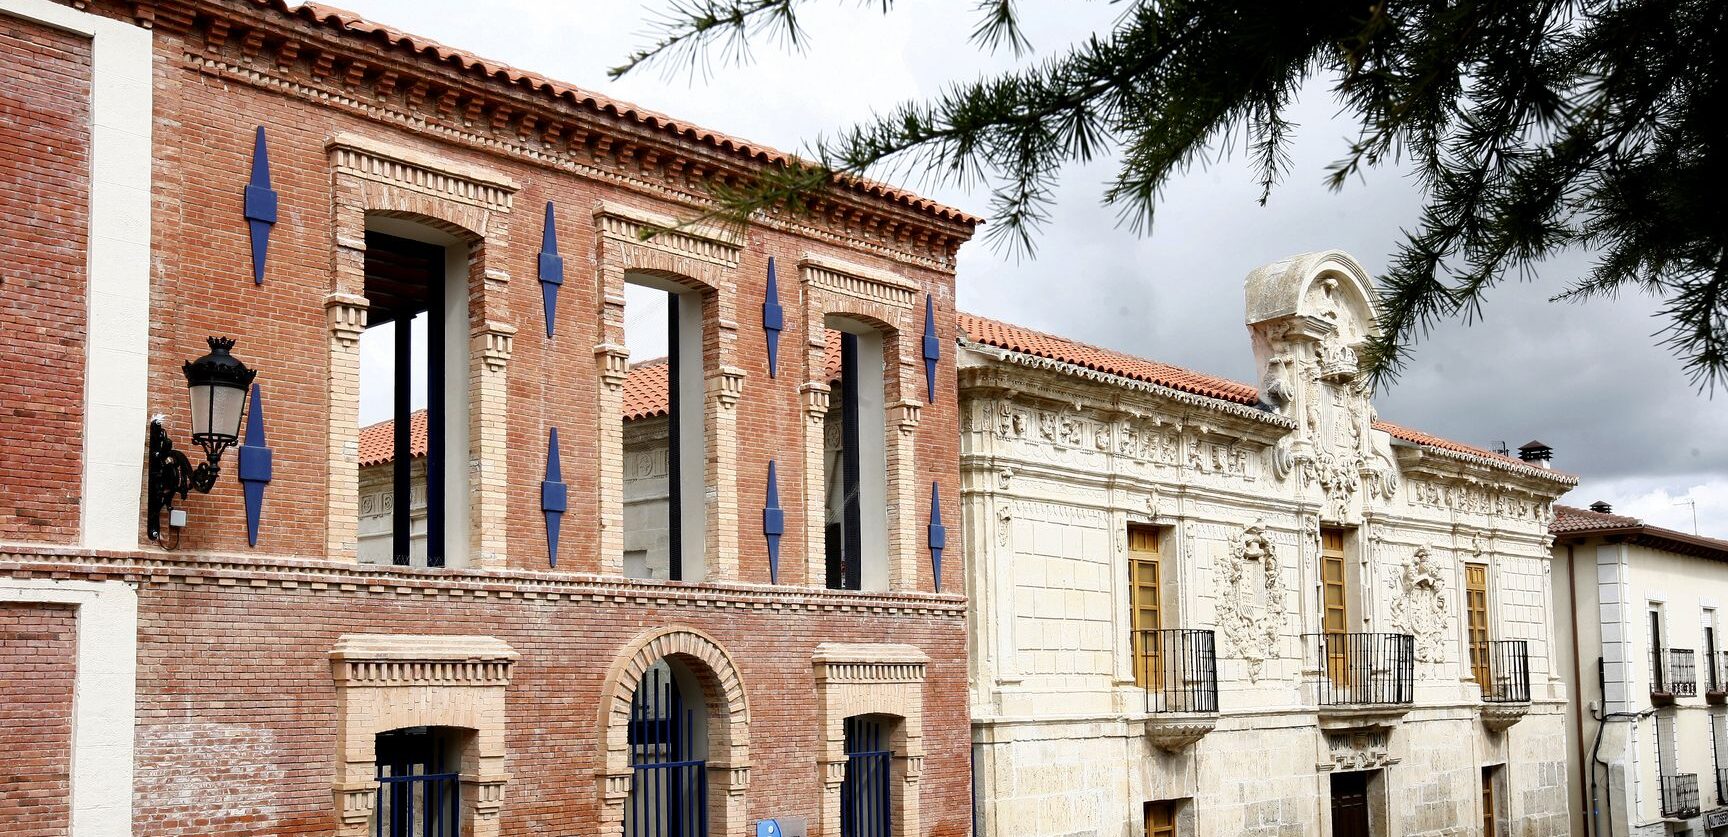 MUSEO DEL CERRATO CASTELLANO		Baltanás	Palencia	Museo